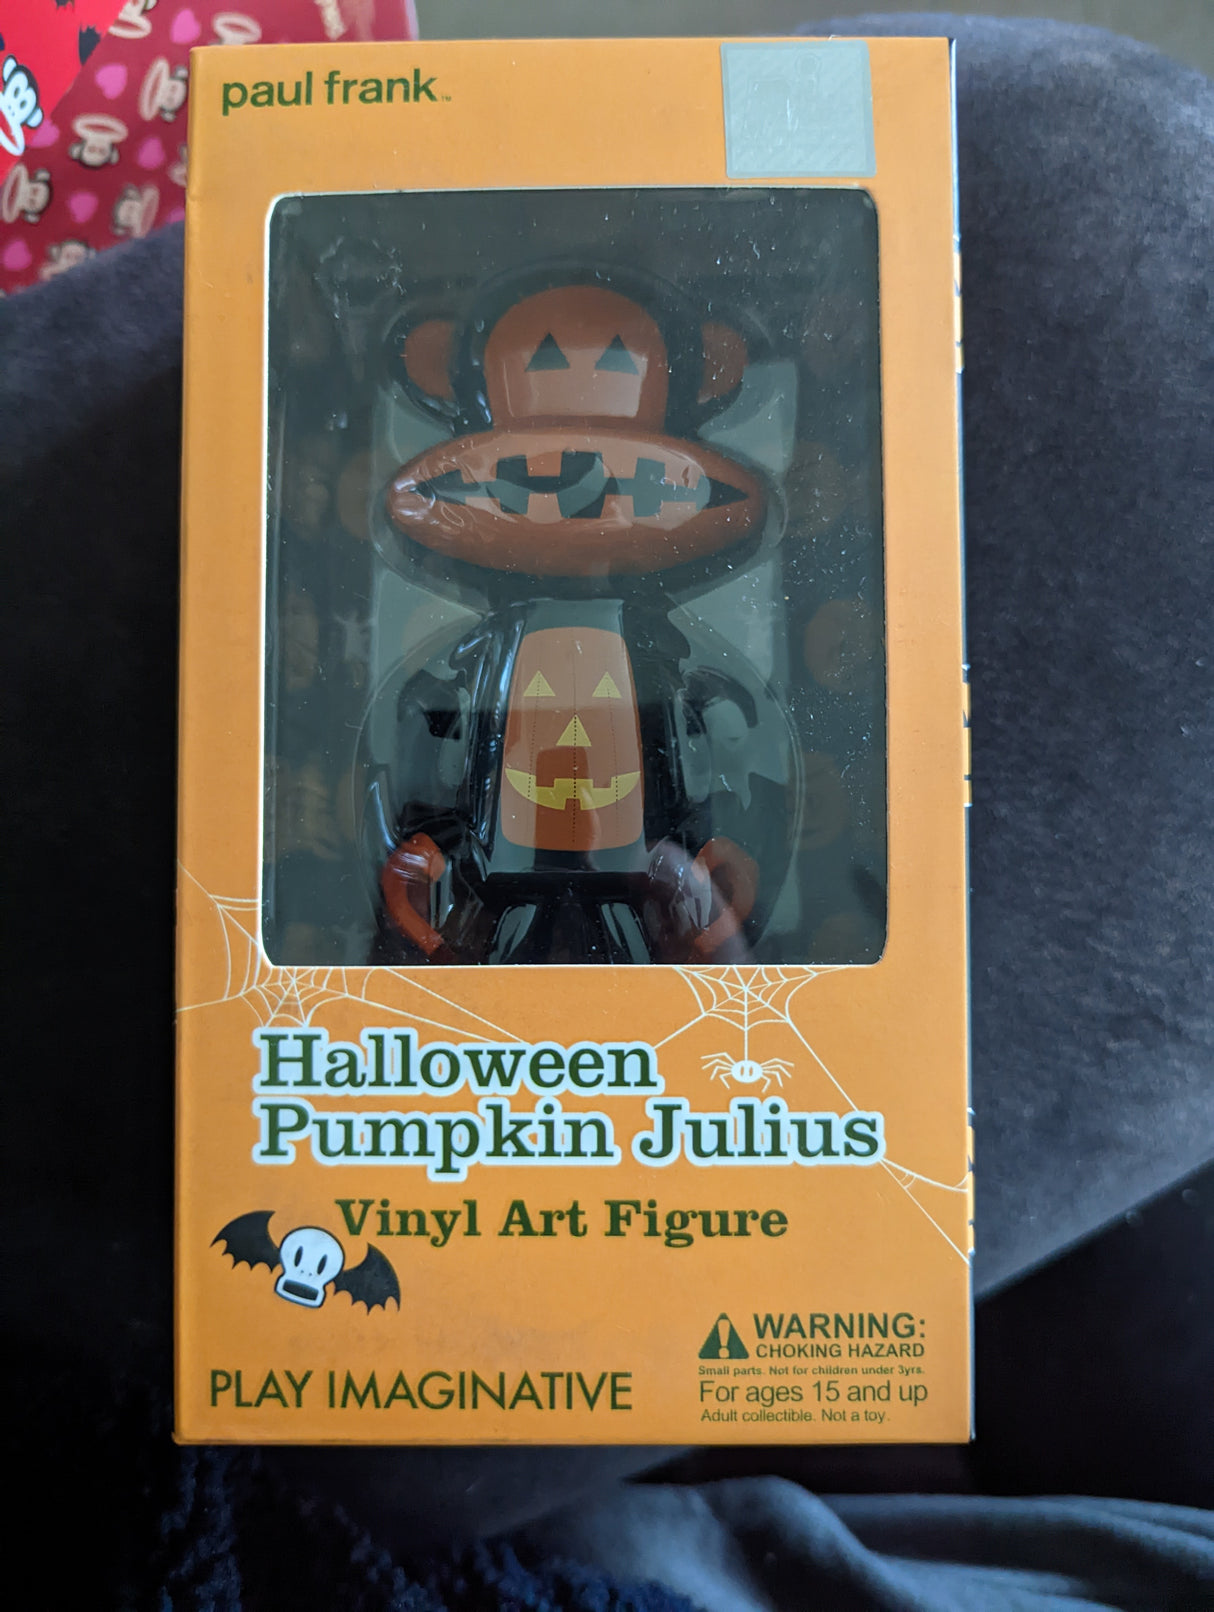 Paul Frank | Halloween Pumpkin Julius | Vinyl Art Figure (7104510197860)